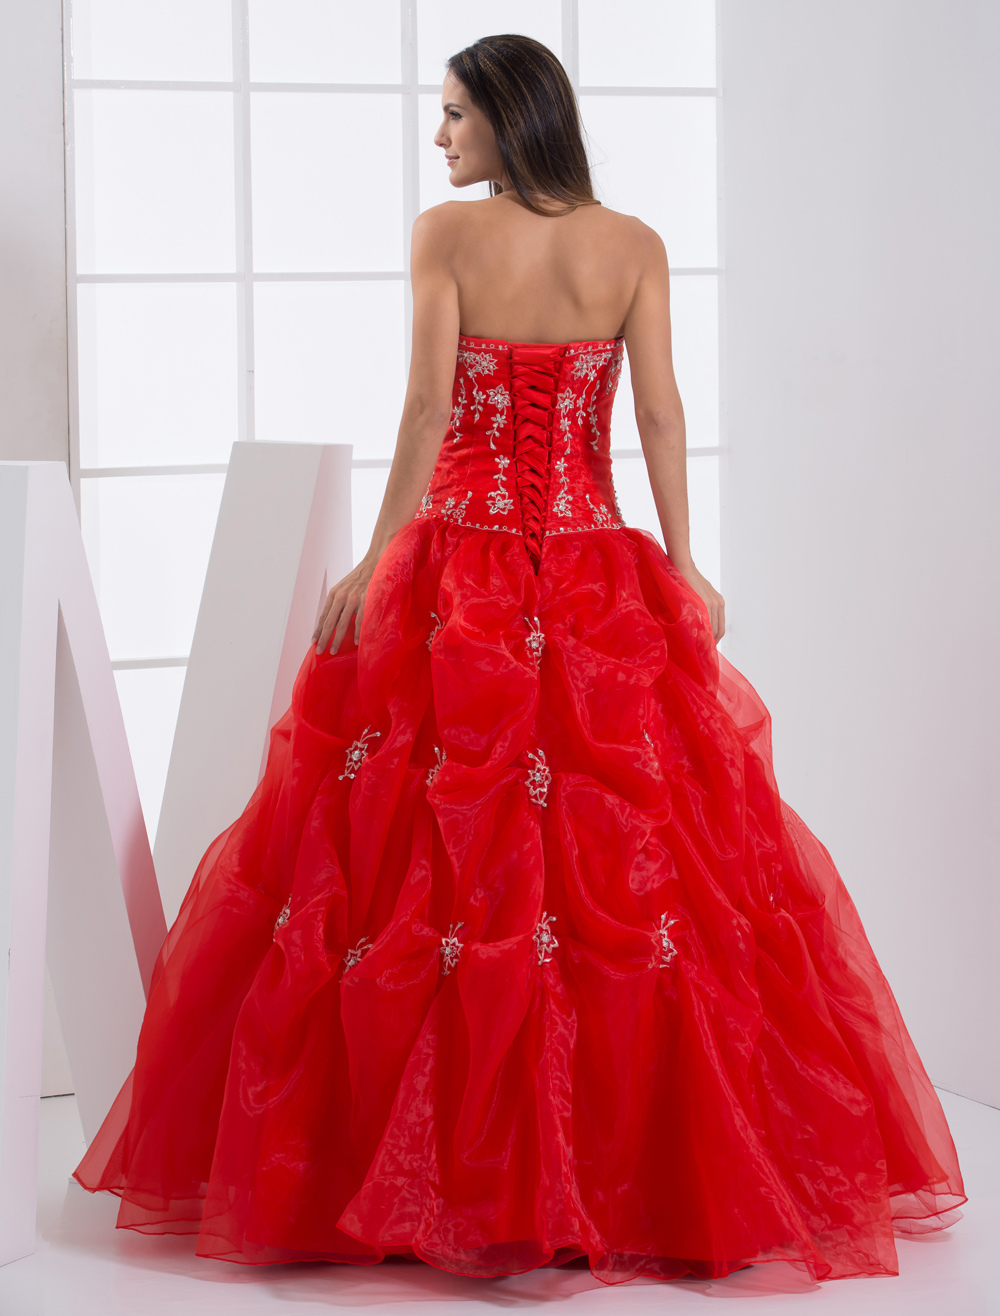 Ball Gown Red Strapless Quinceanera Dress - Milanoo.com